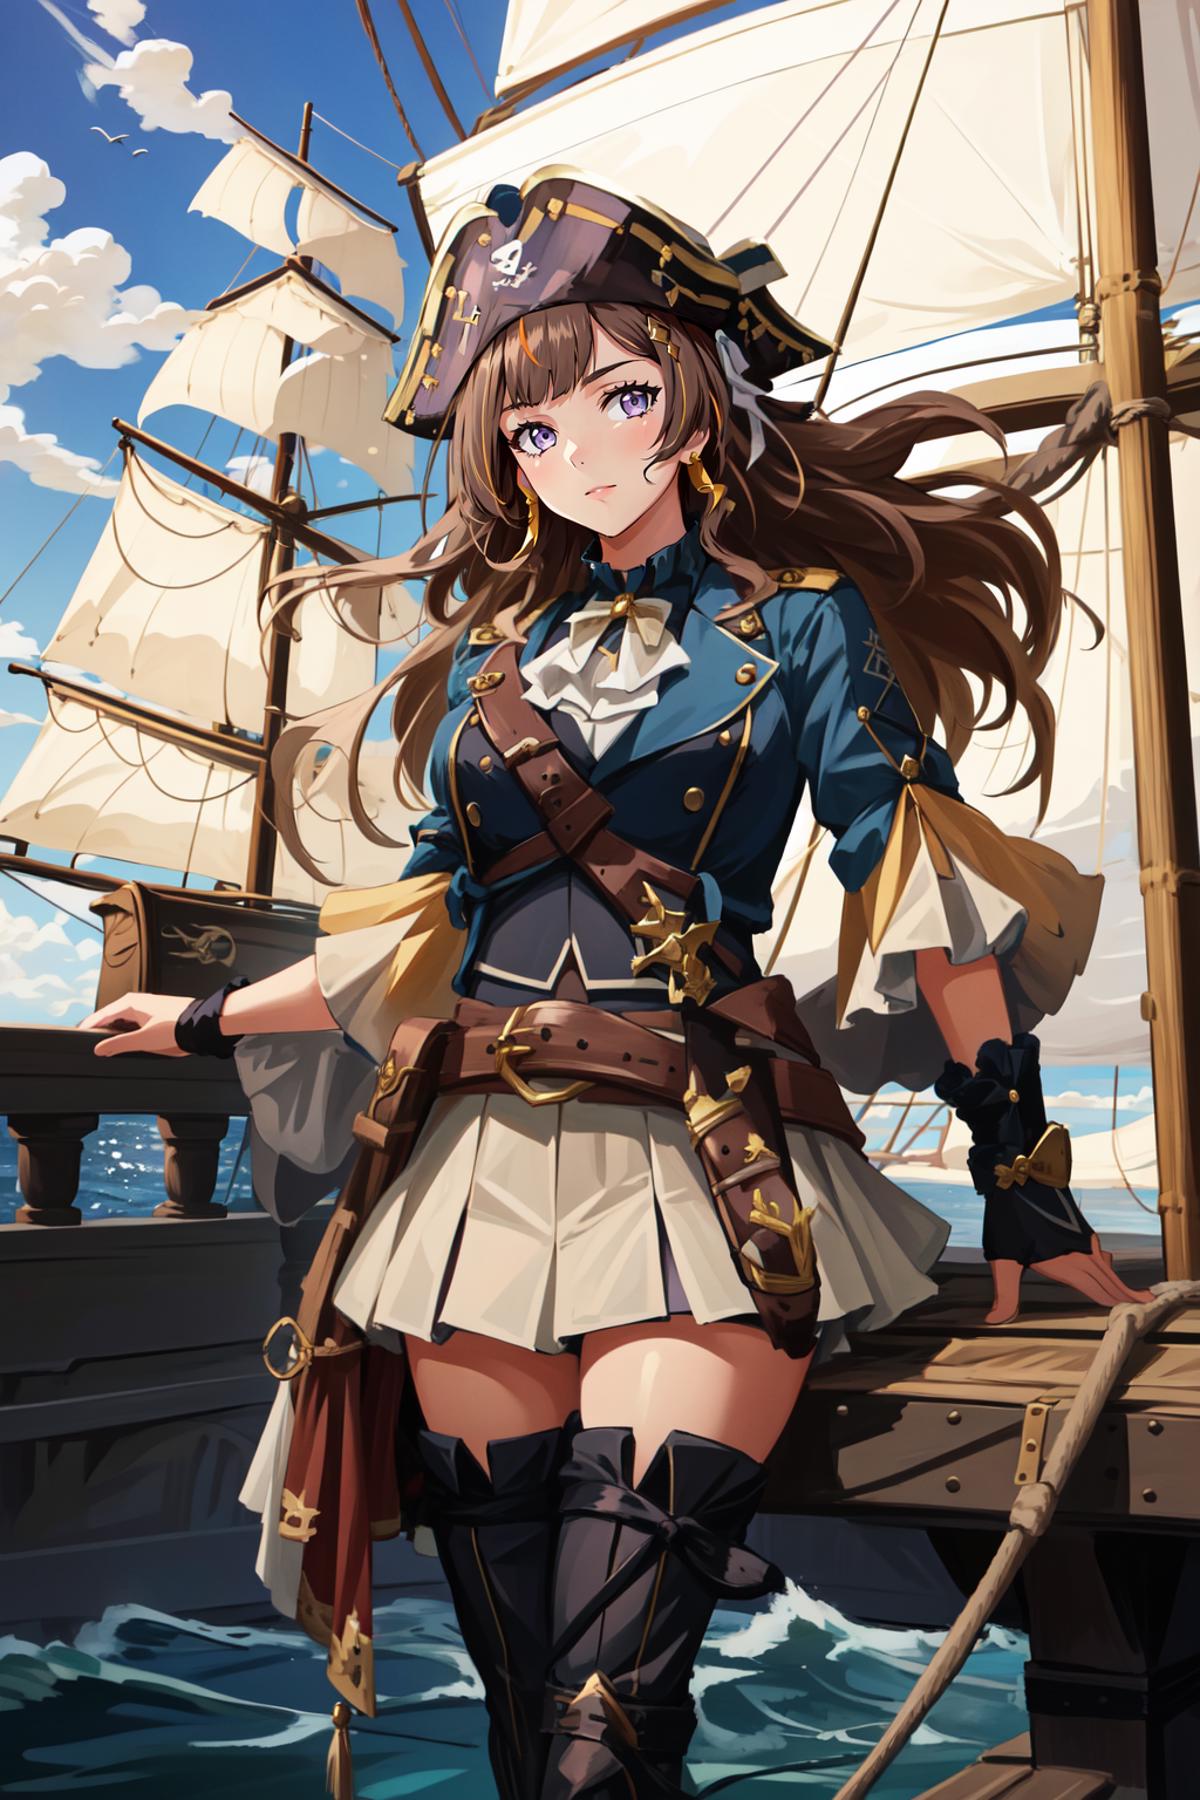 Change-A-Character: Pirate, Your Waifu Has Set Sail on the Seven Seas! image by PettankoPaizuri